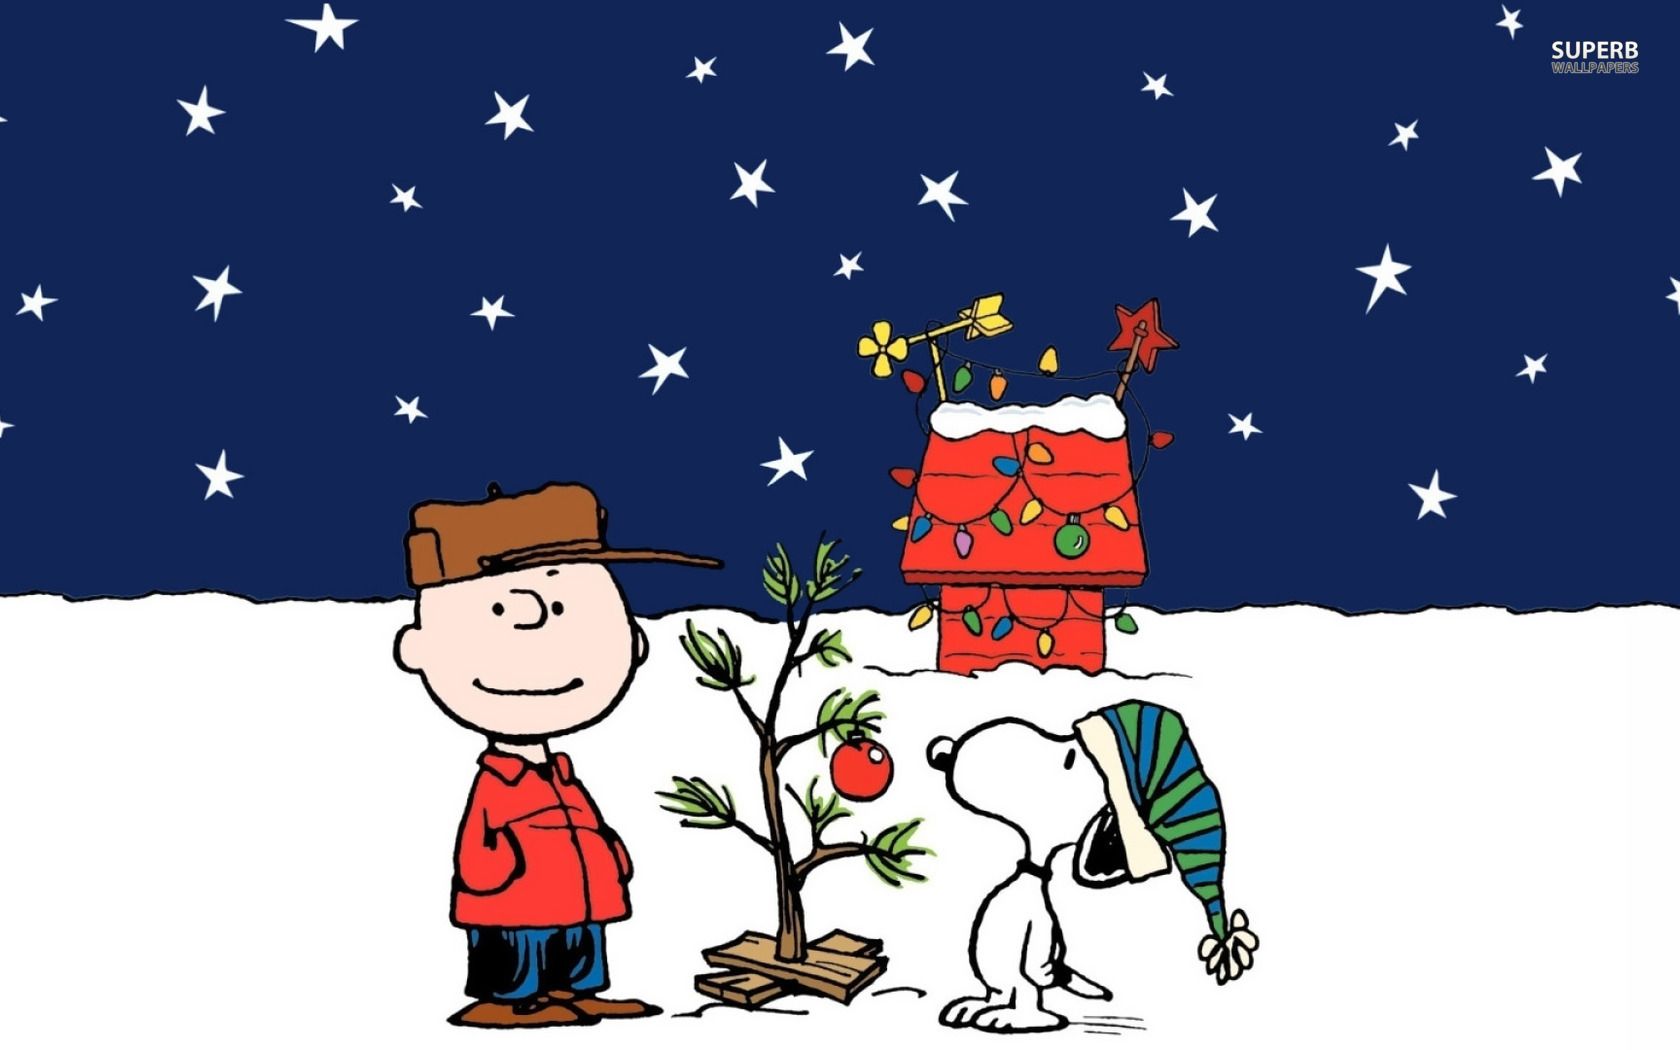 A Charlie Brown Christmas wallpaper - Cartoon wallpapers - #16795